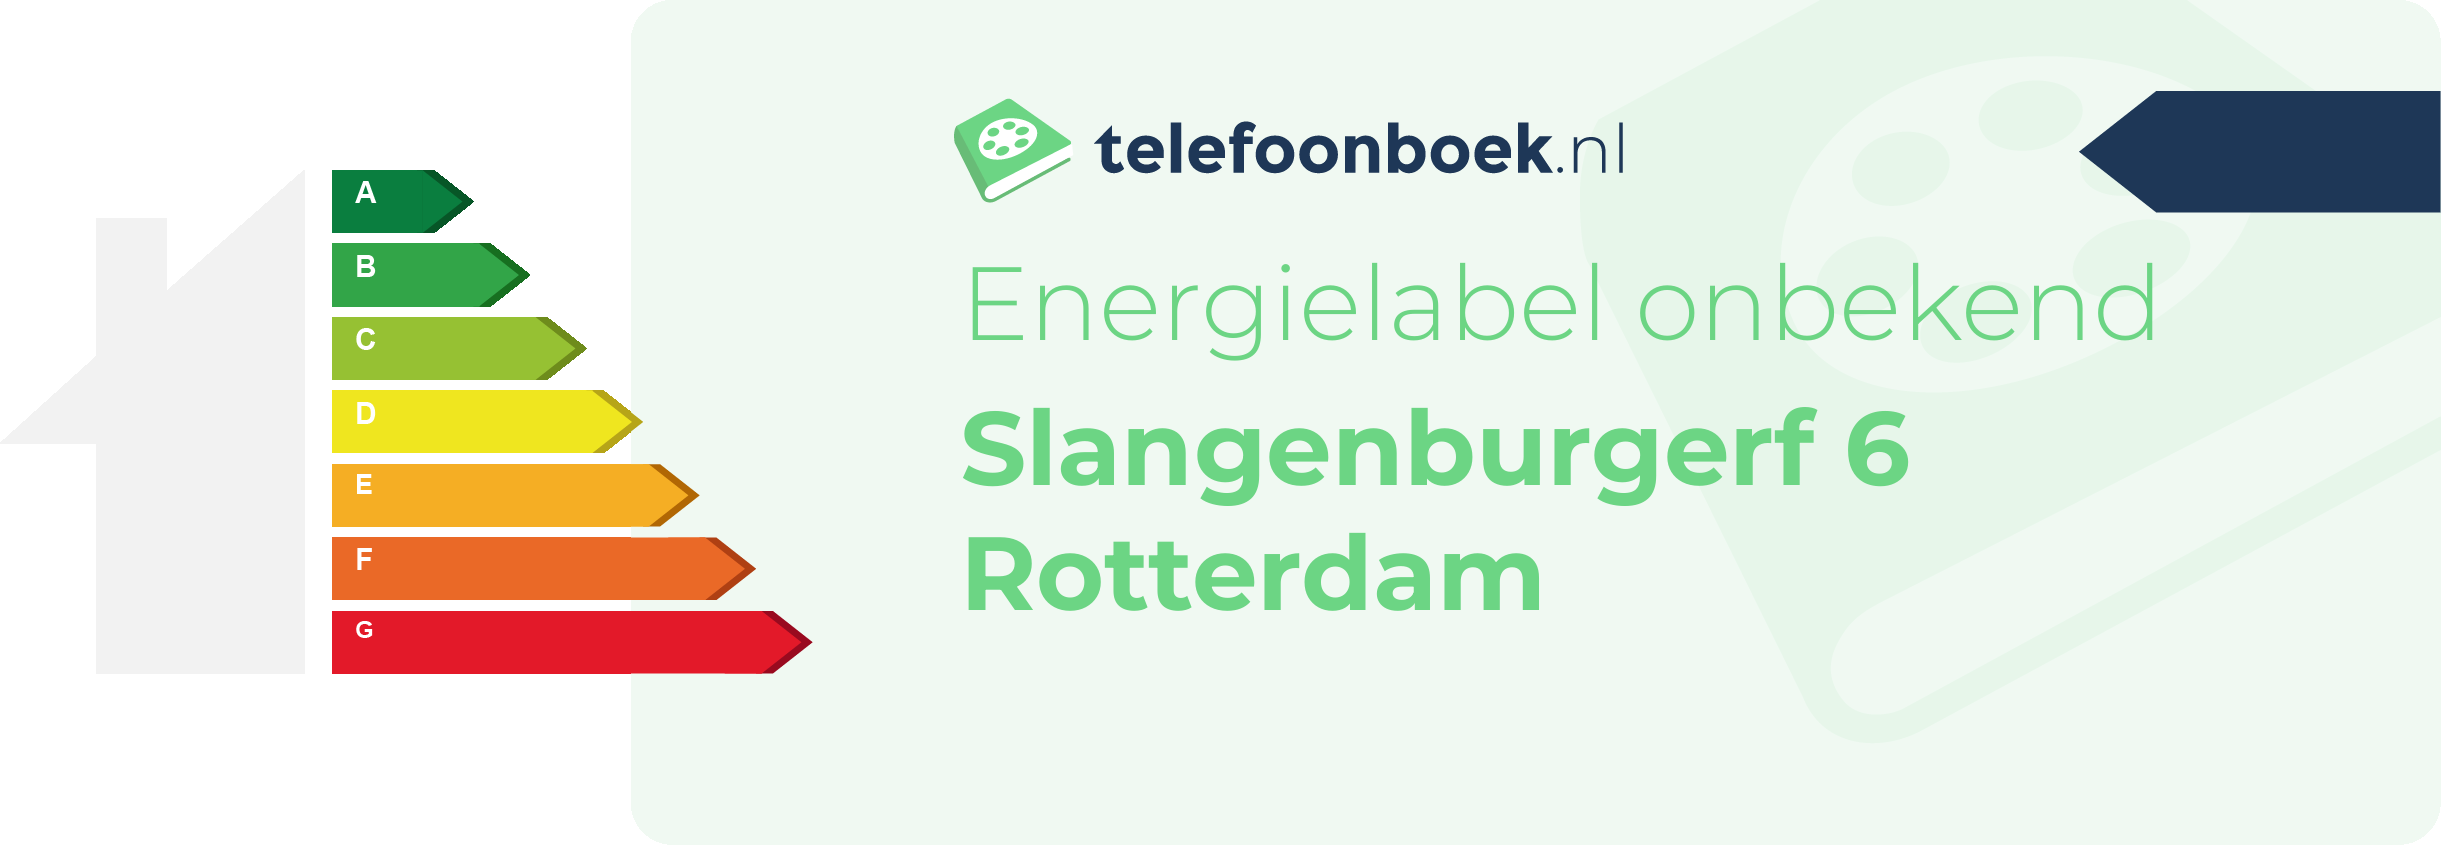 Energielabel Slangenburgerf 6 Rotterdam